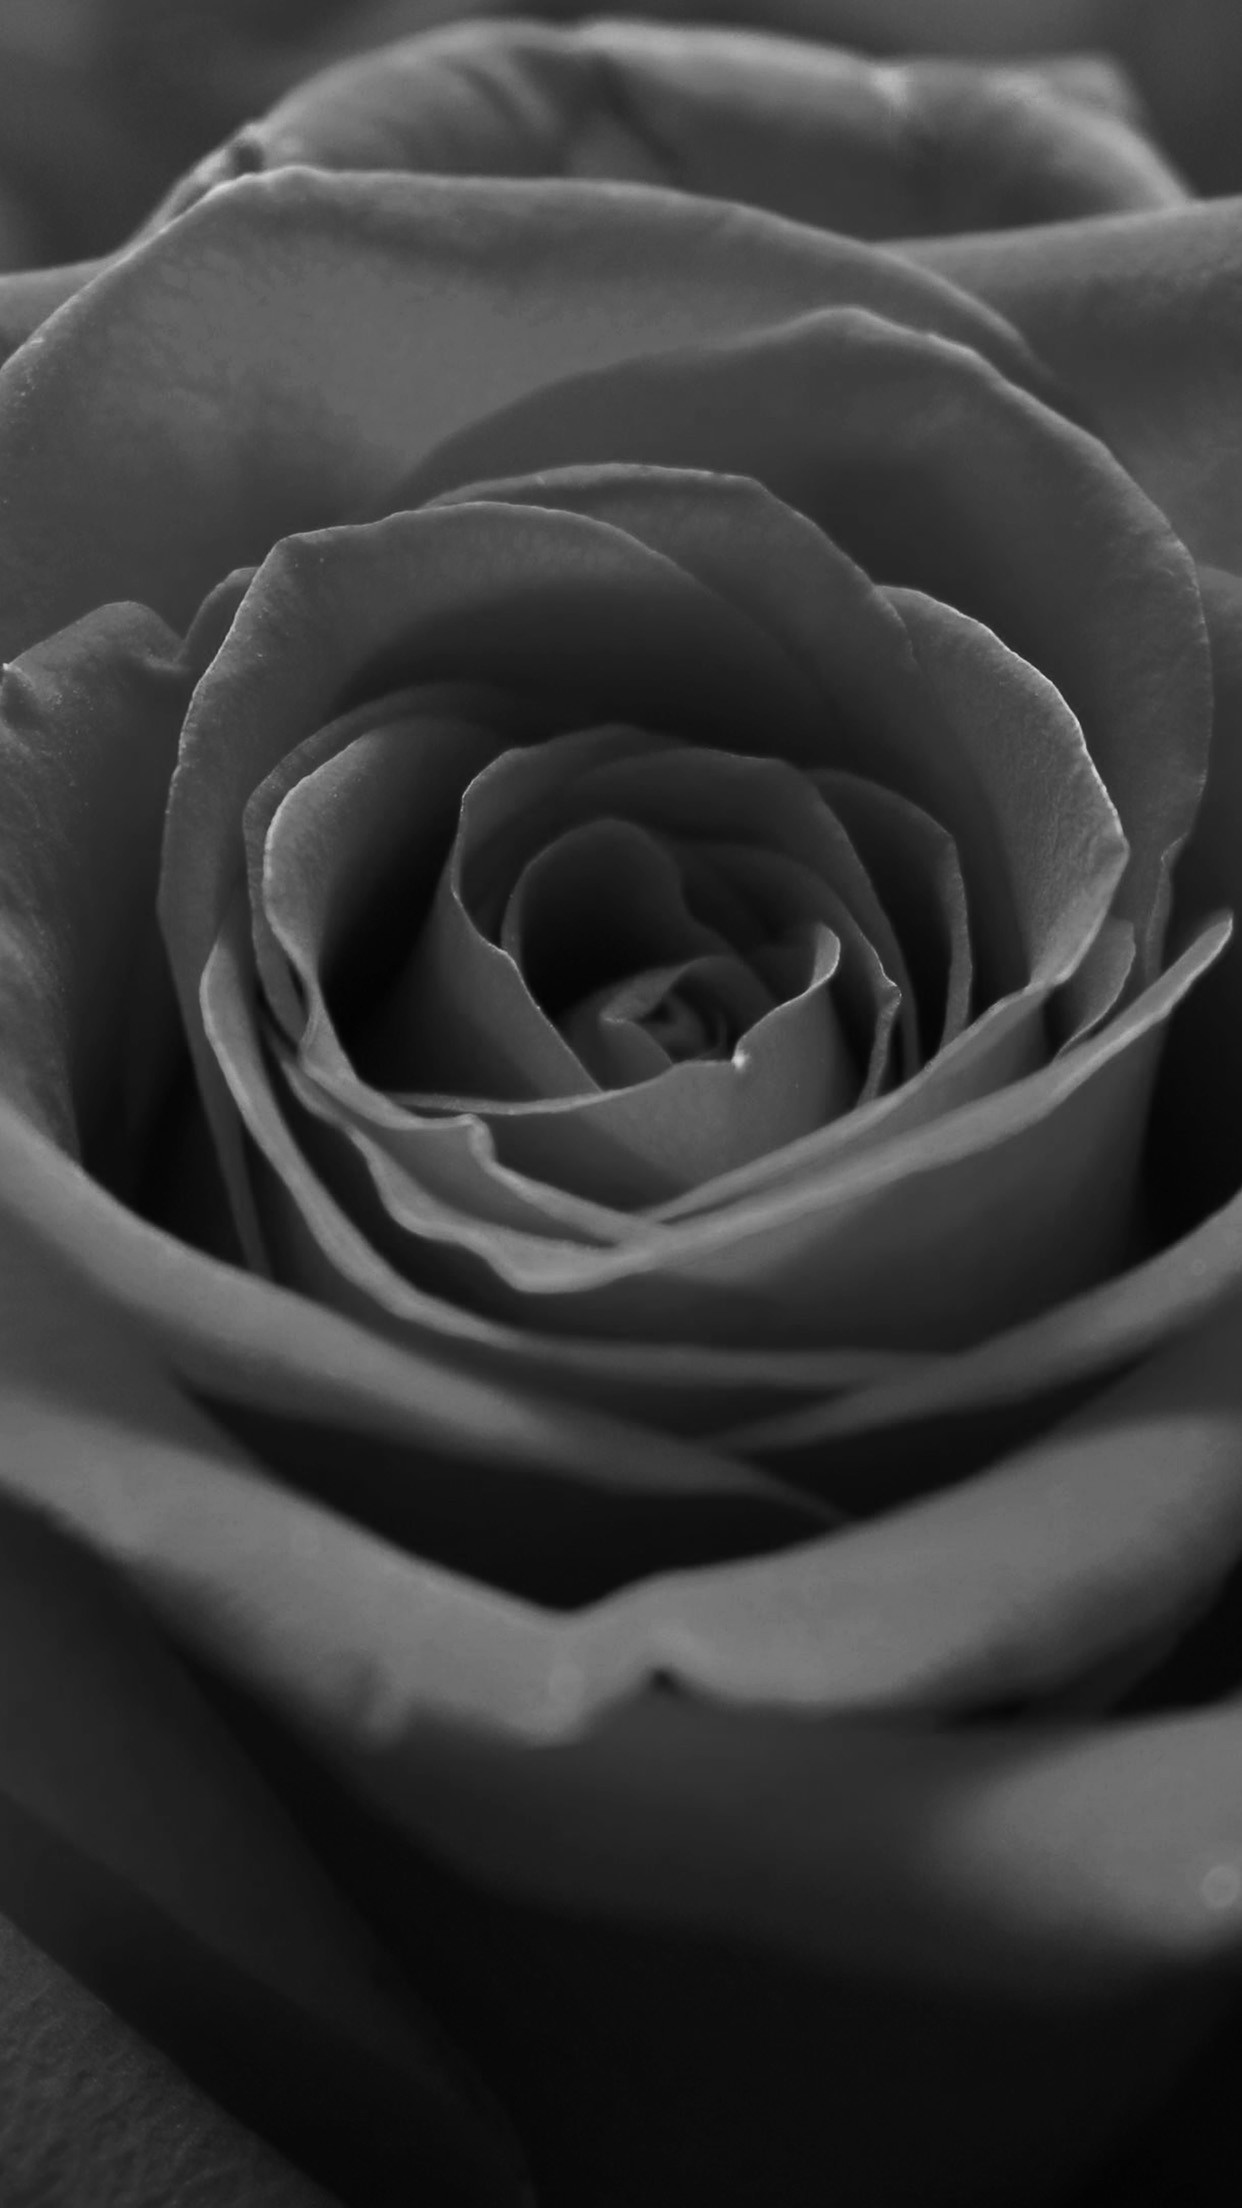 1242x2208 Black And White Macro Rose Flower Grey Dark Android Wallpaper ...